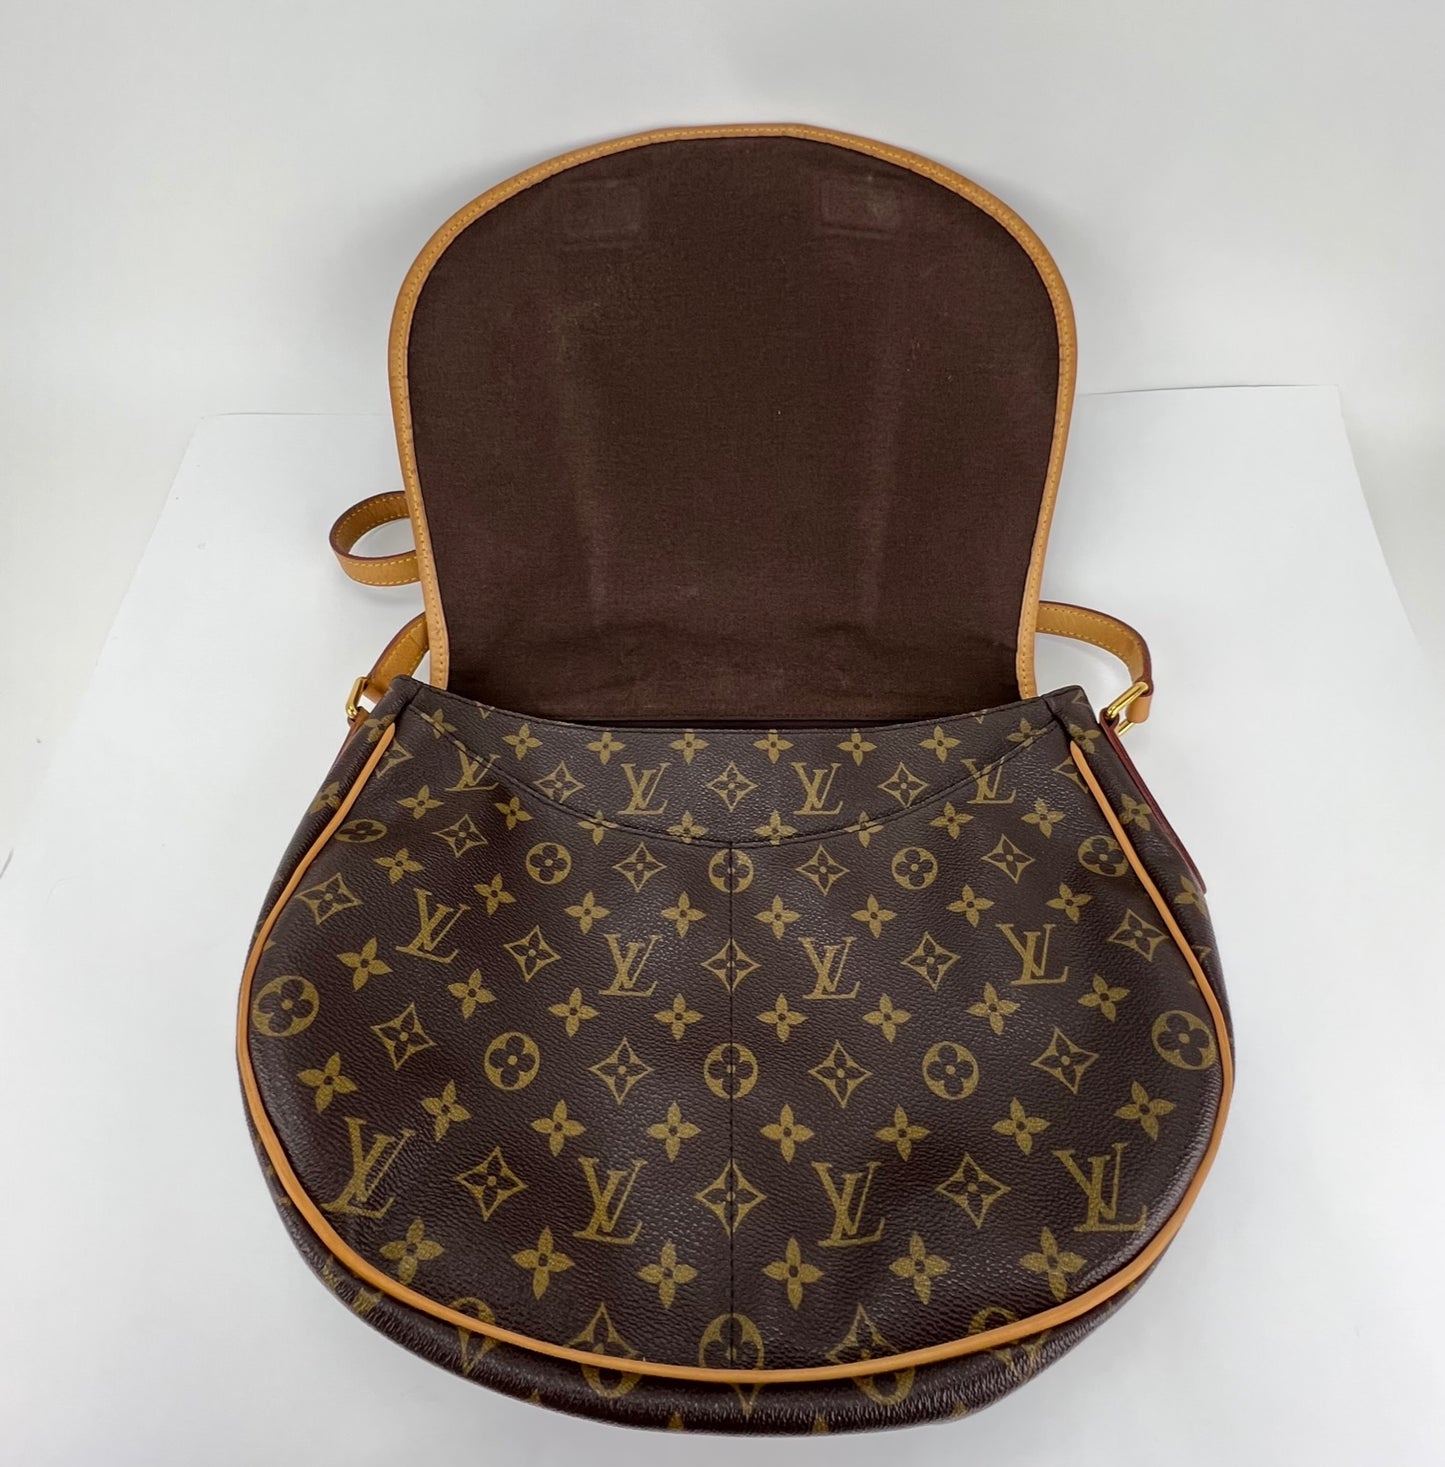 Authentic Louis Vuitton Tambourine Sling Bag